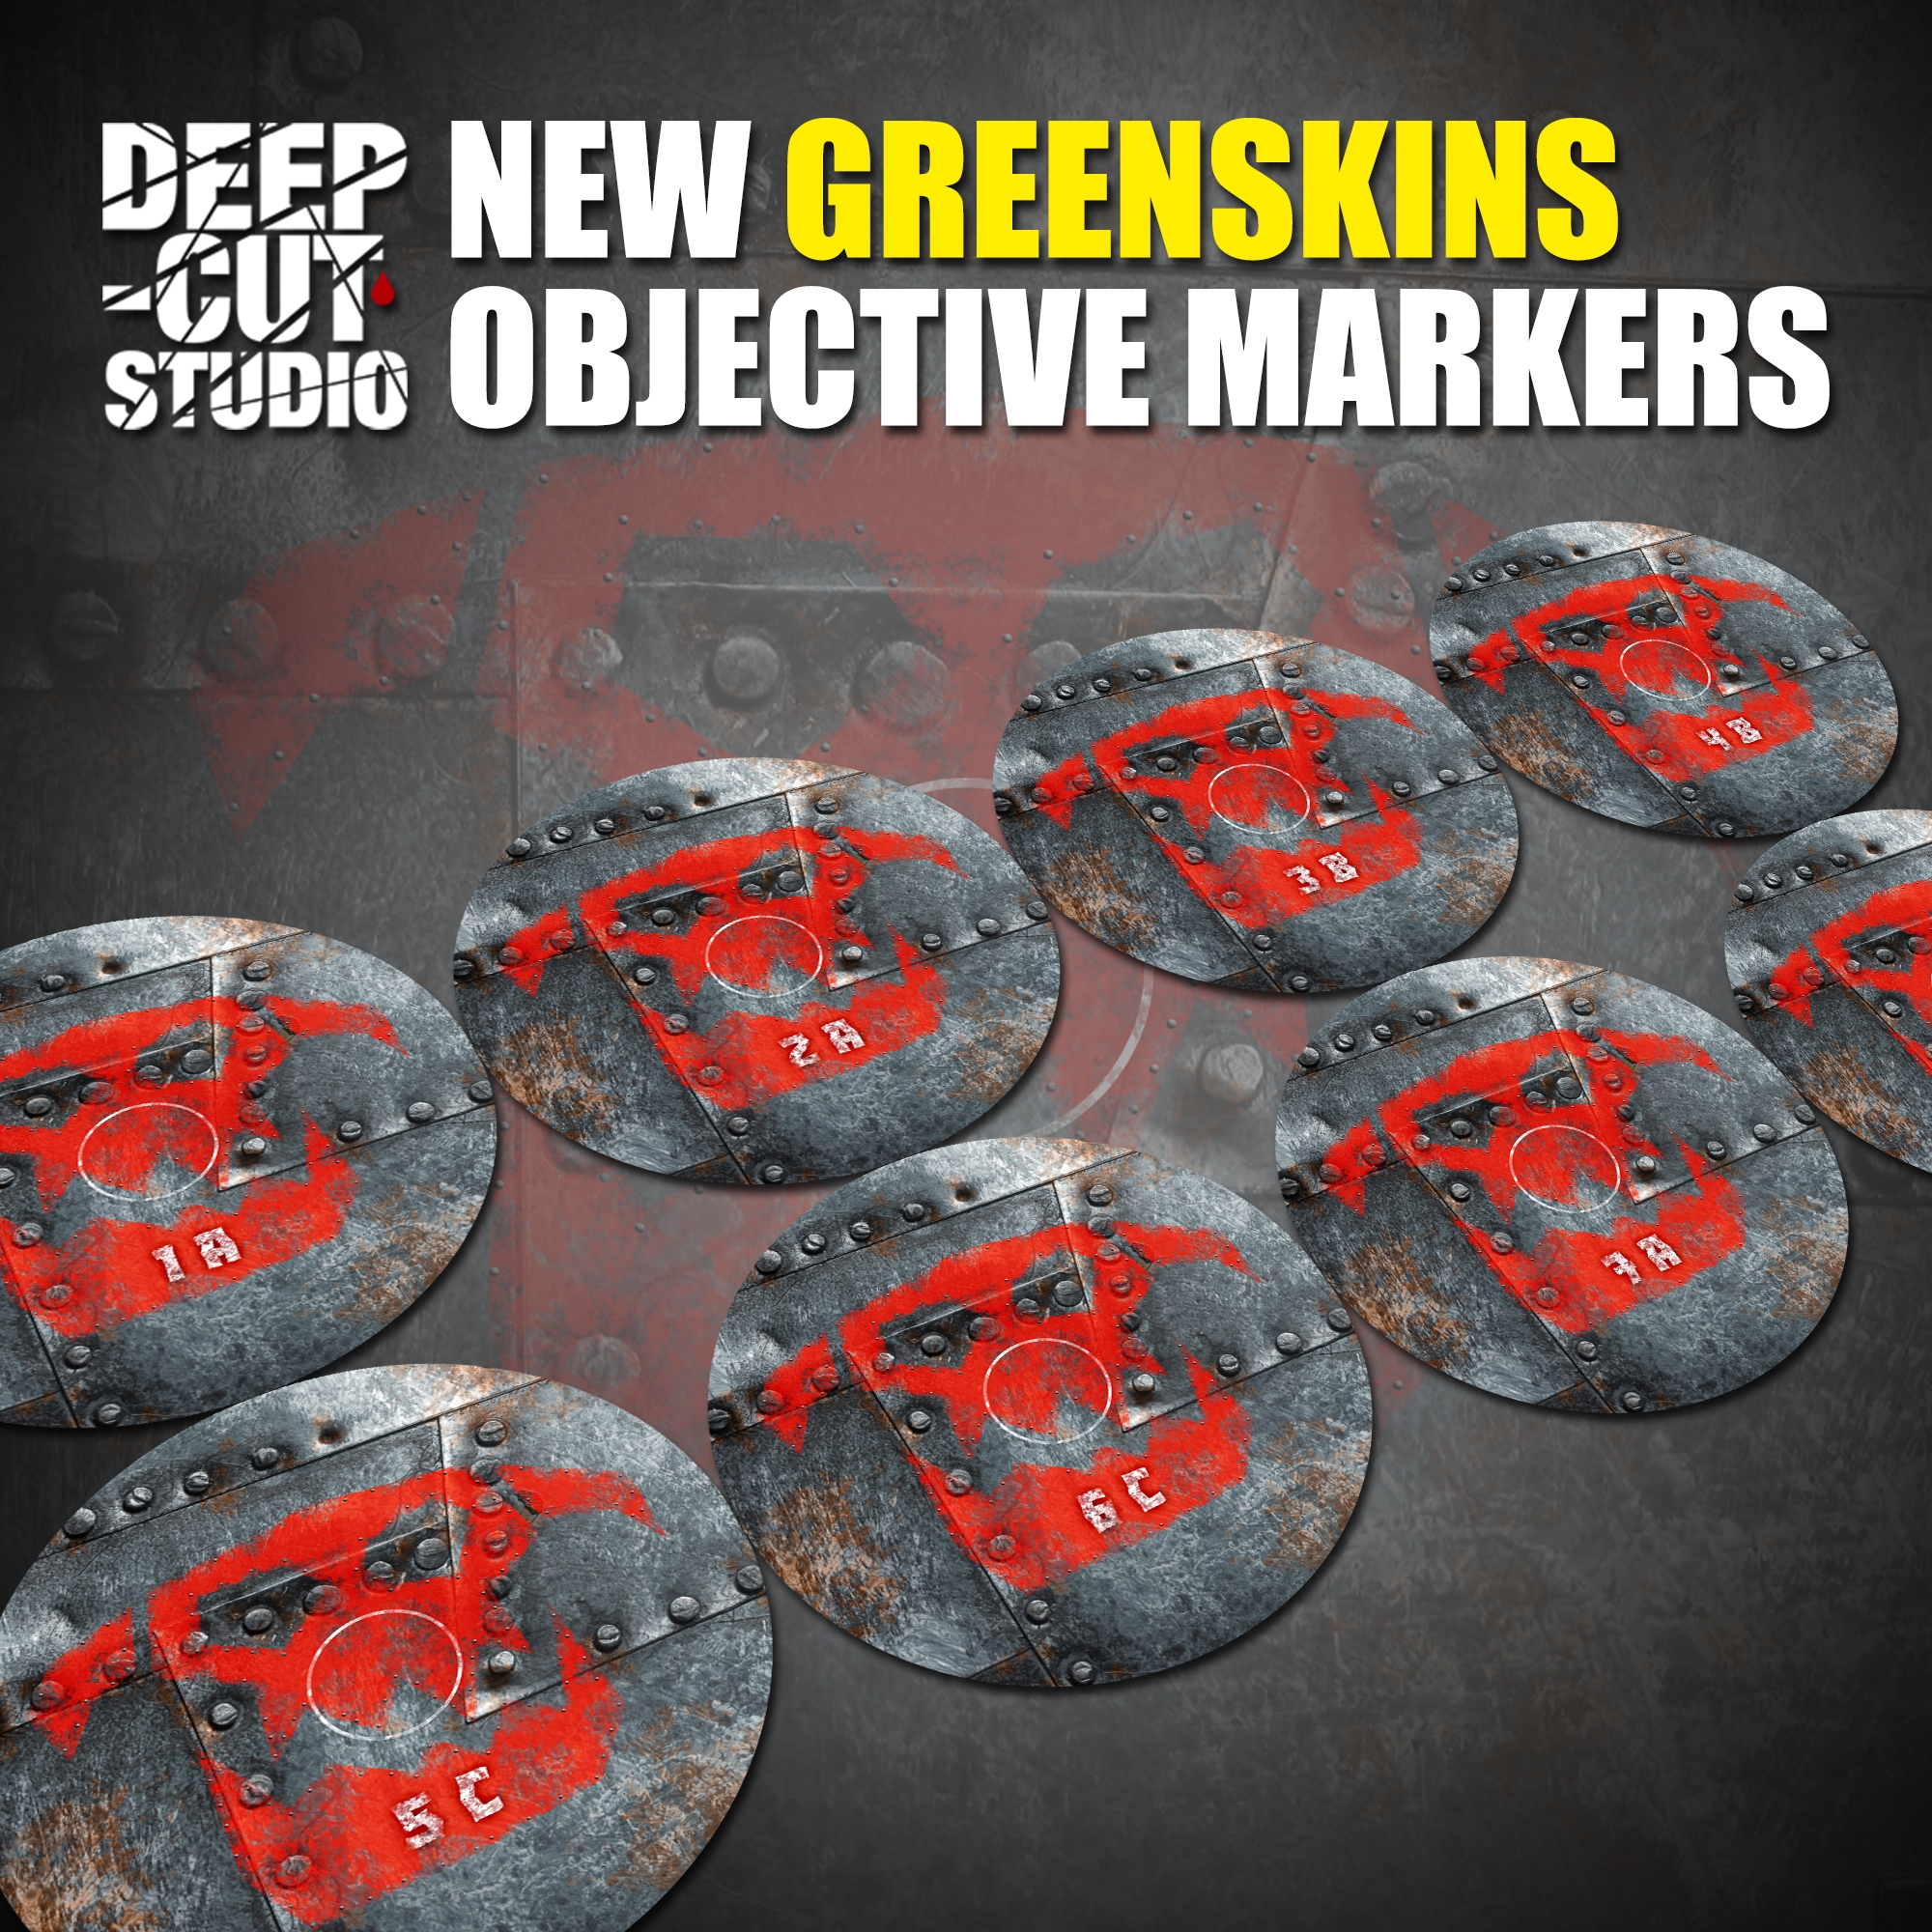 Greenskins Objective Markers - Deep-Cut Studio